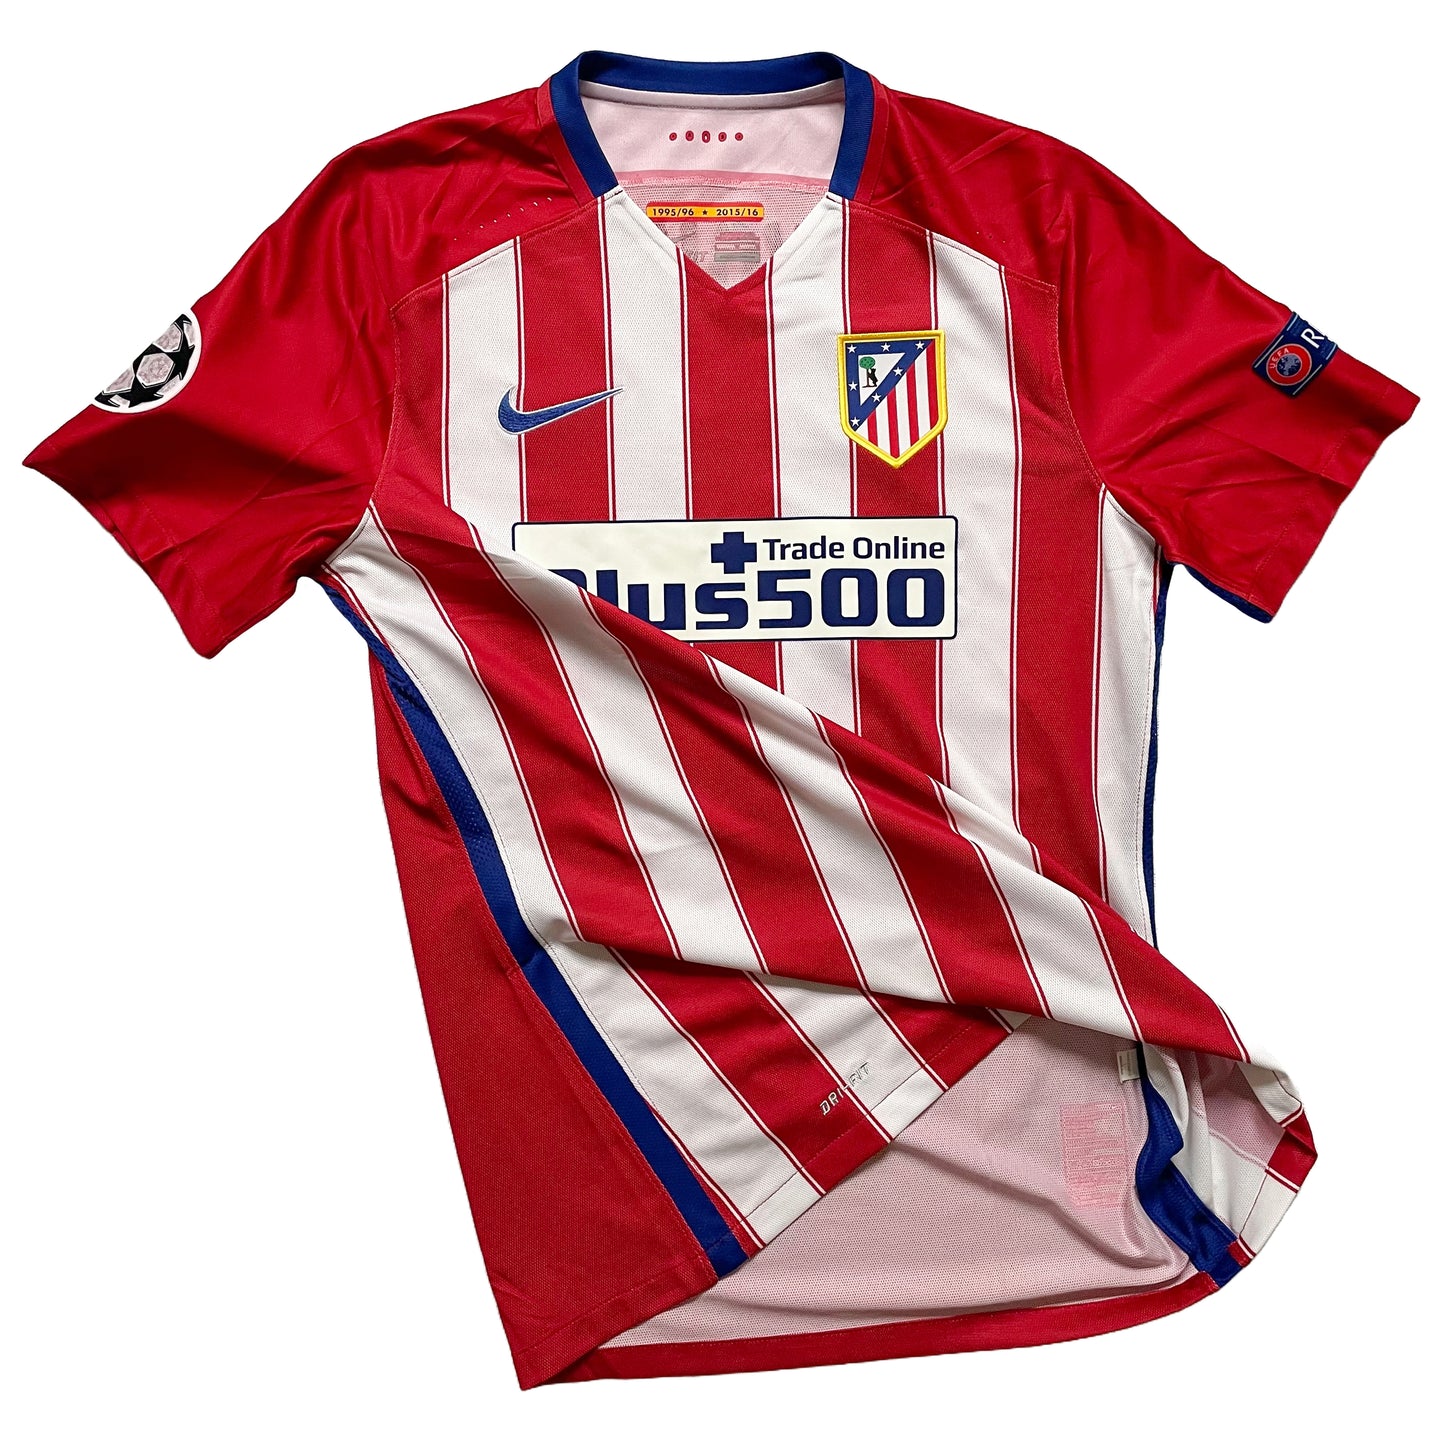 2015-2016 Atlético de Madrid Player Issue Champions League home shirt #6 Koke (L)